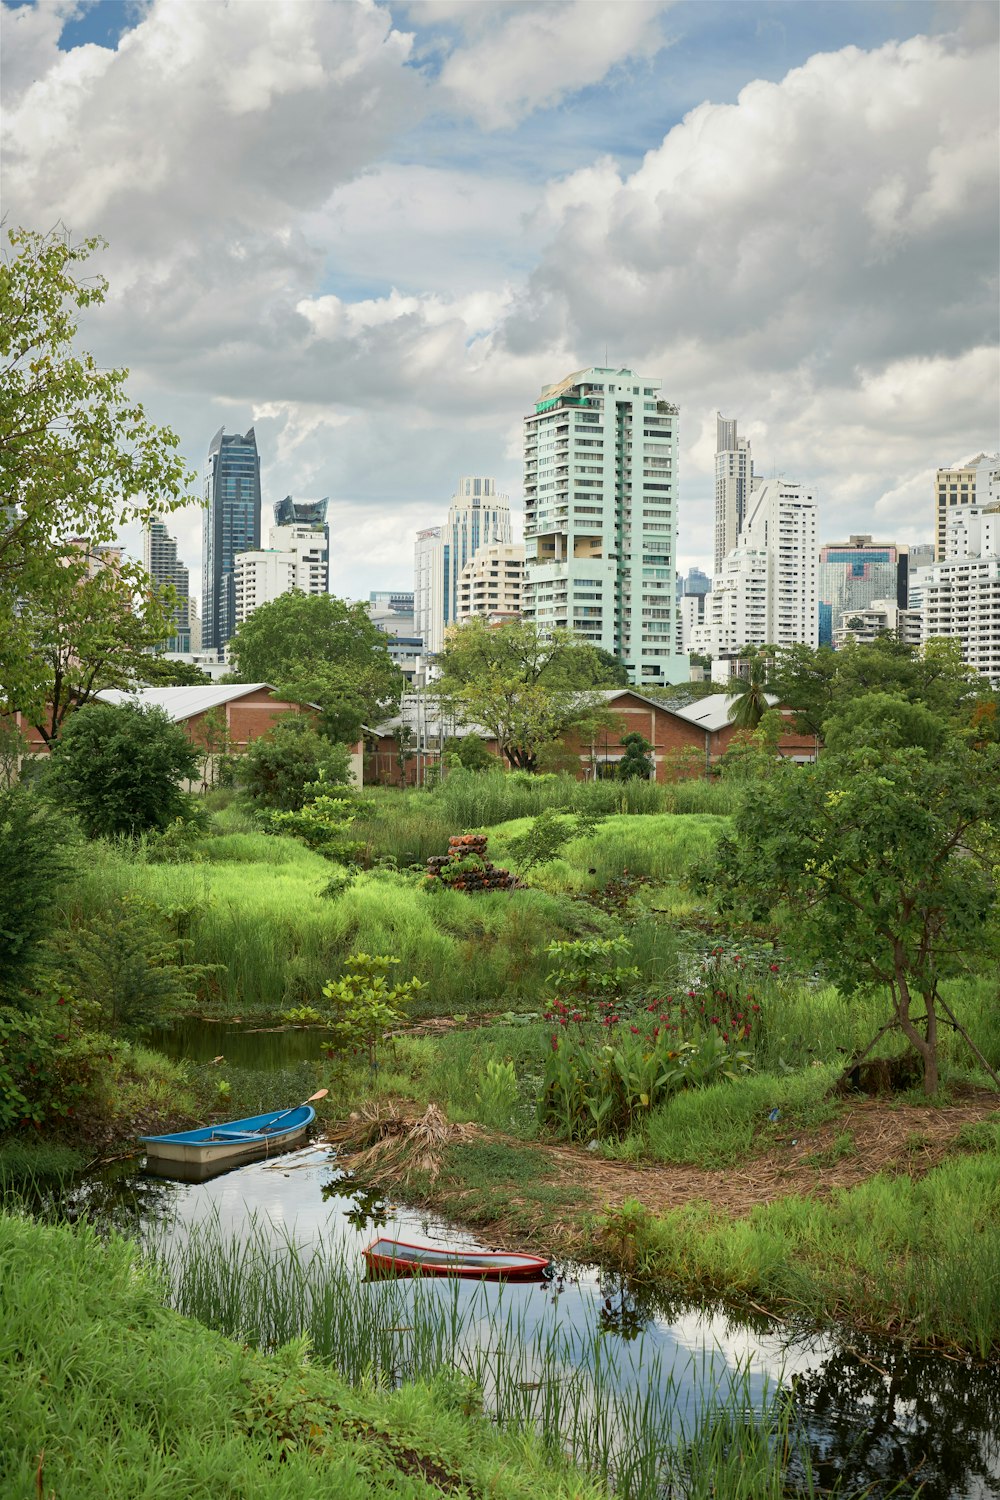 a river running through a lush green field next to tall buildings